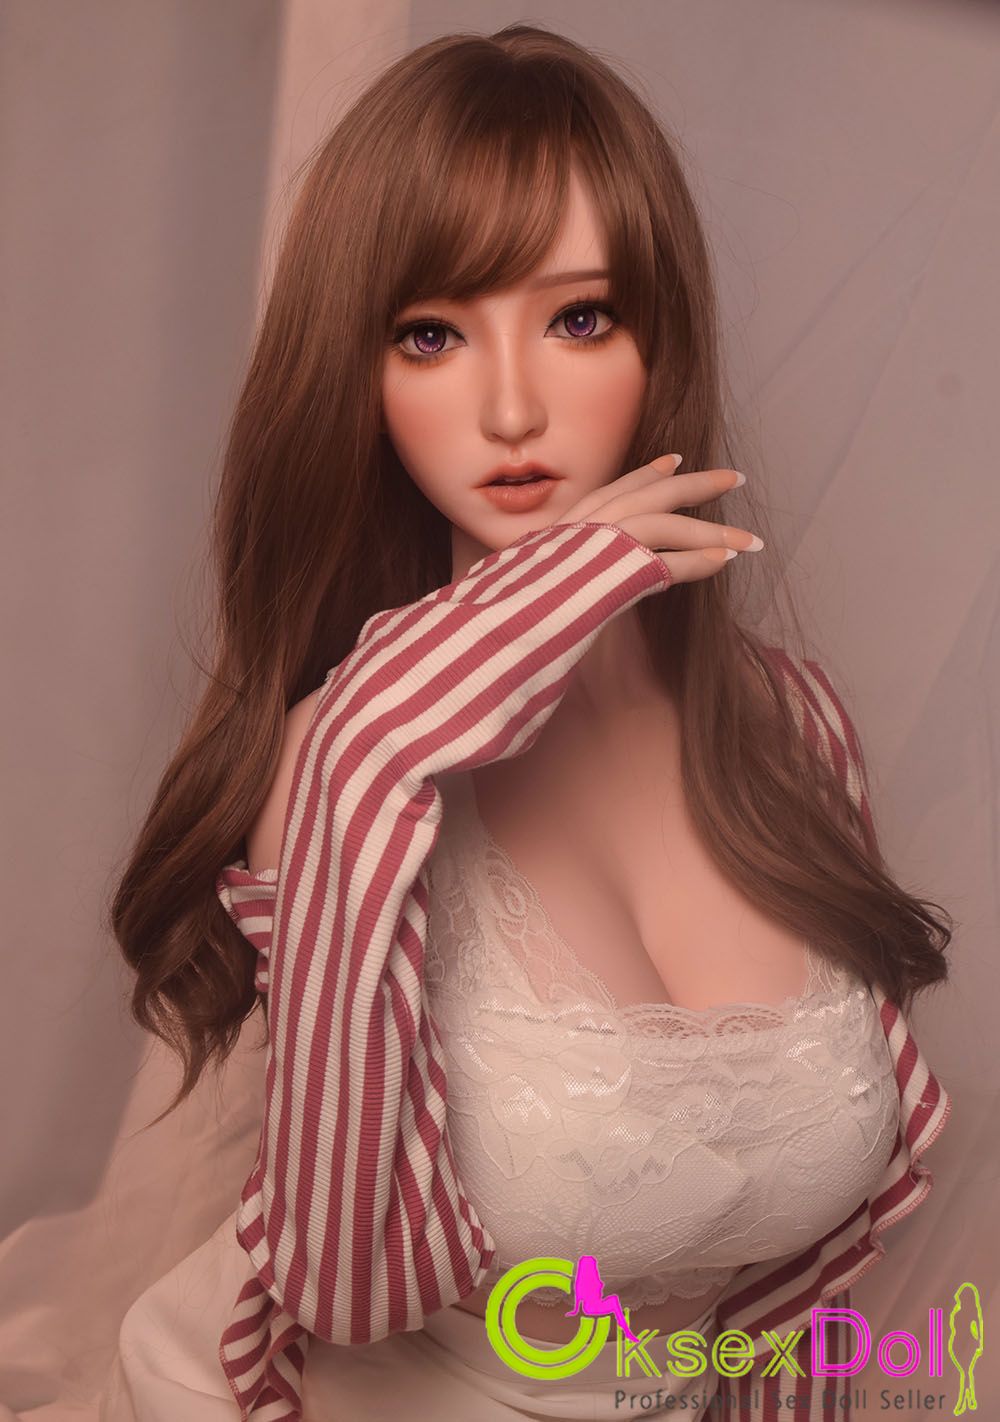 Super Sweet Girl Doll Gallery